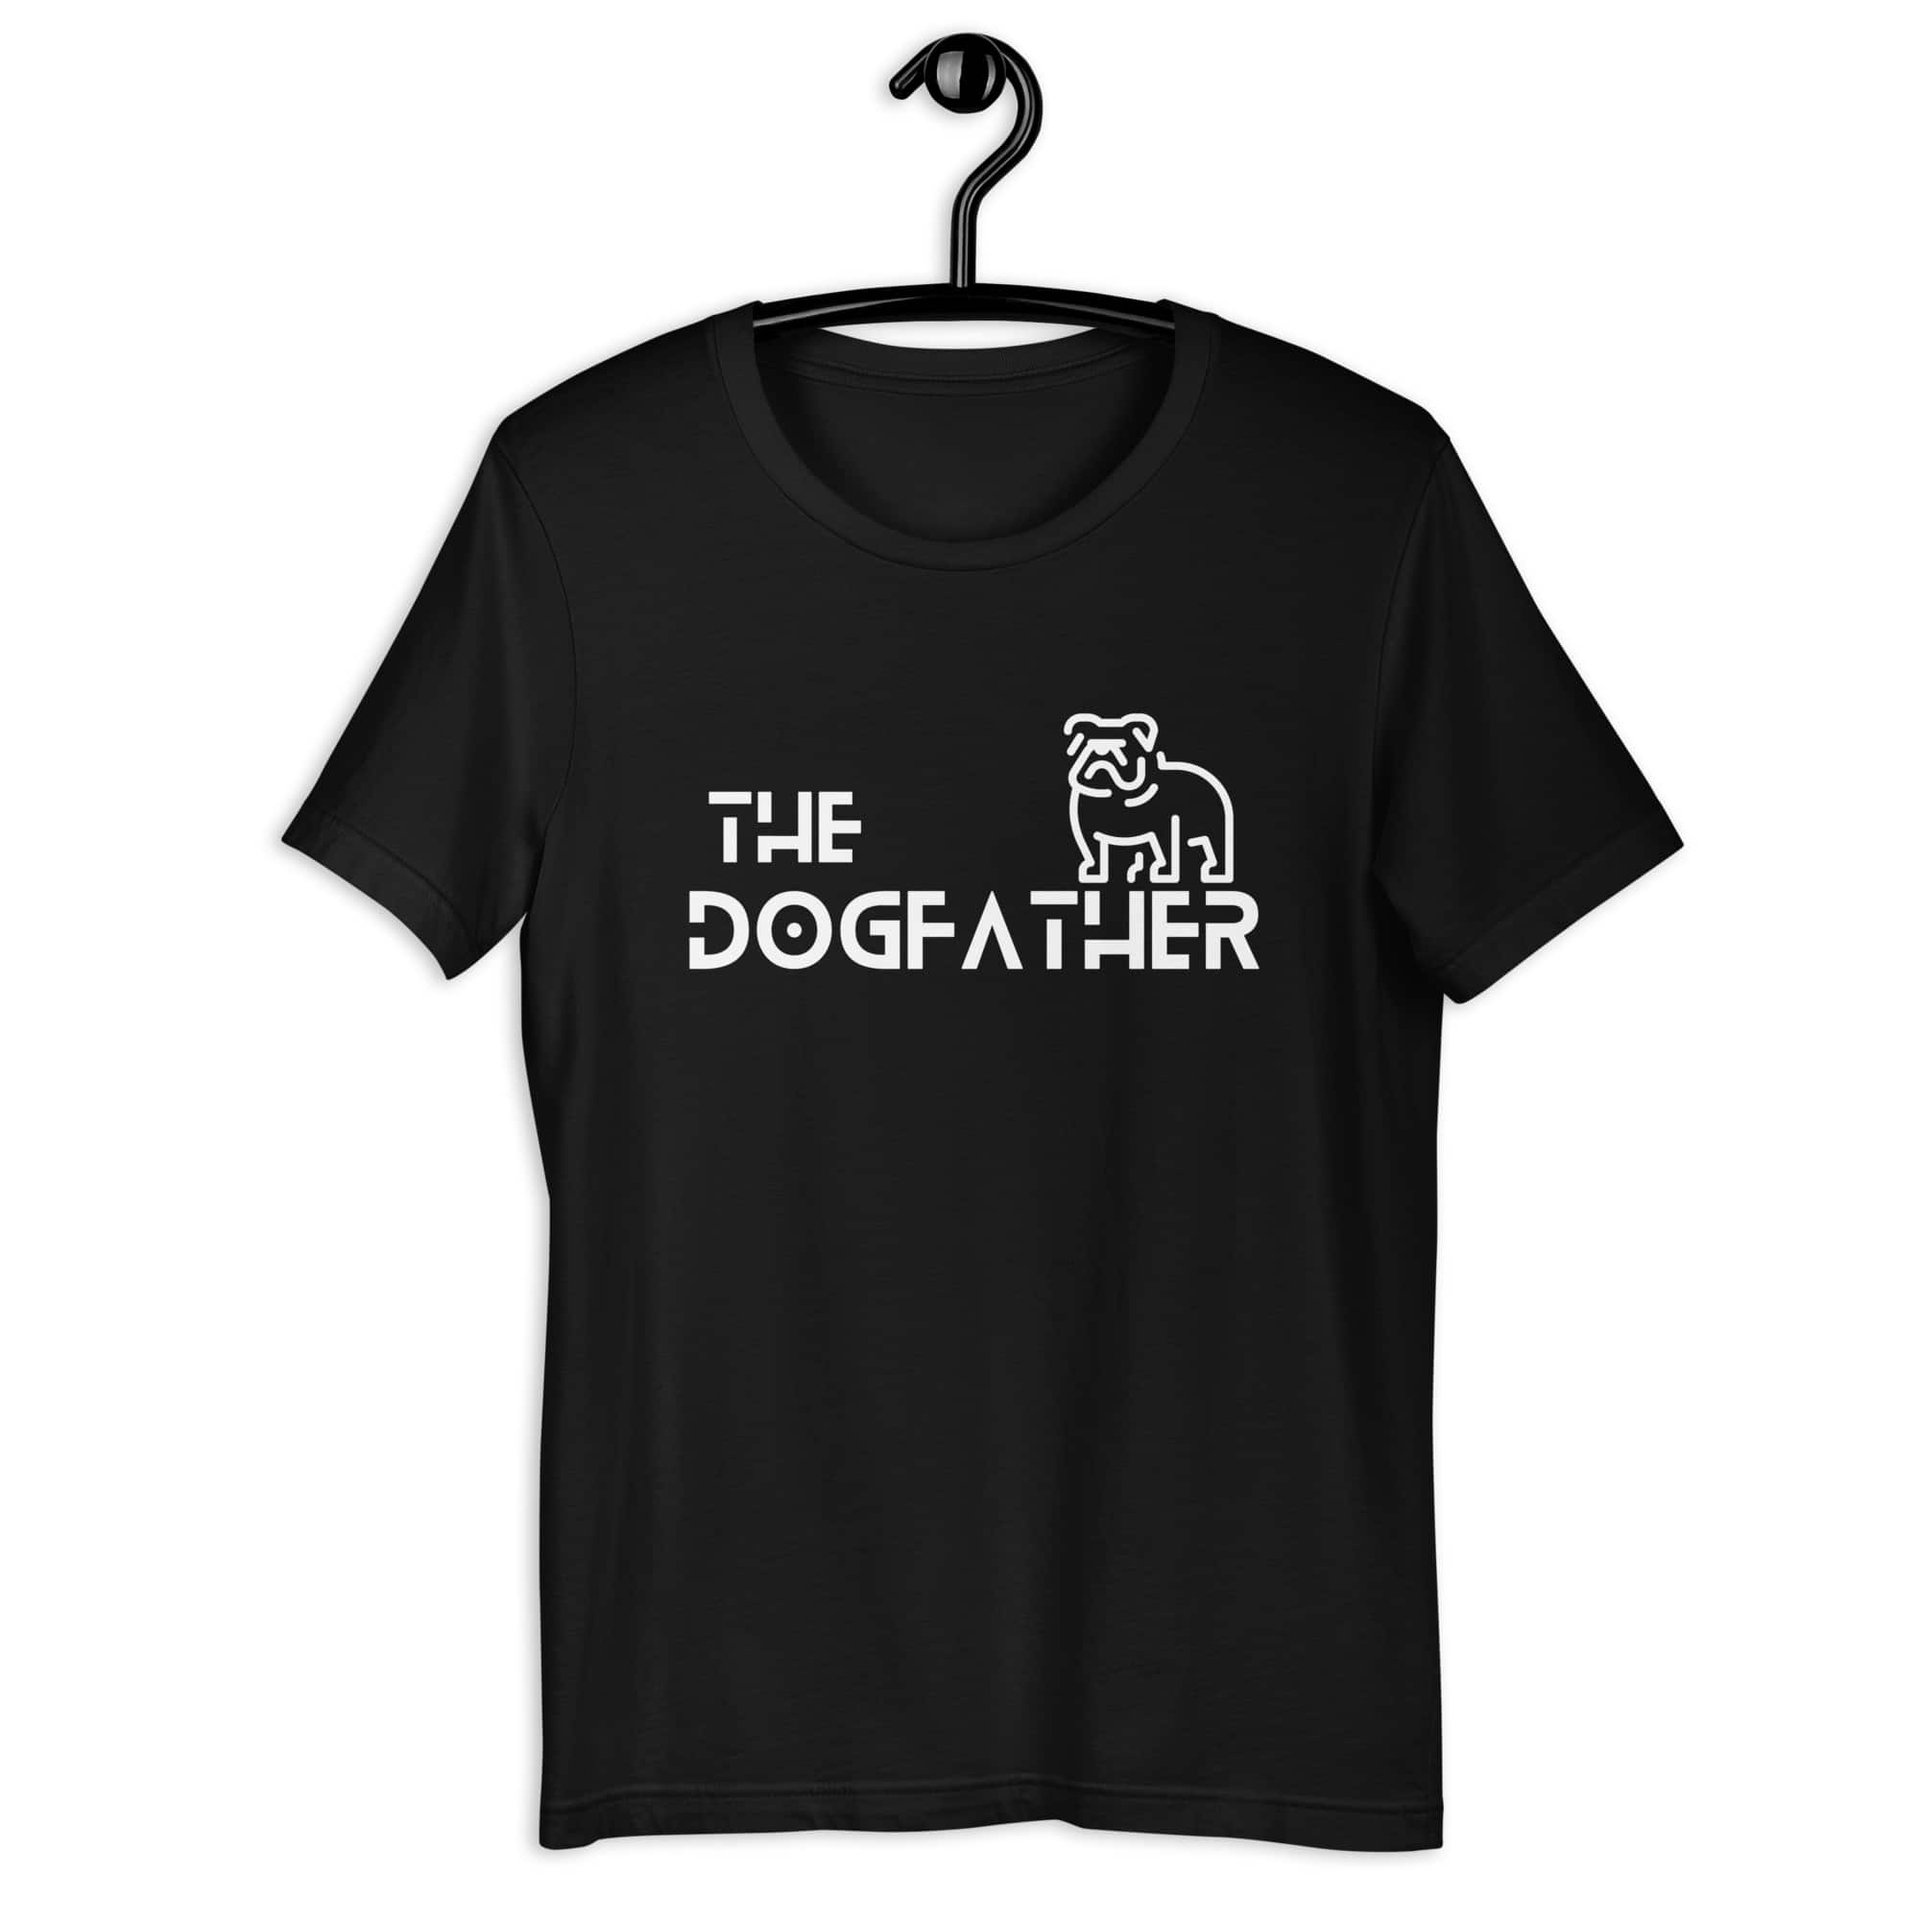 The Dogfather Bulldog Unisex T-Shirt. Black